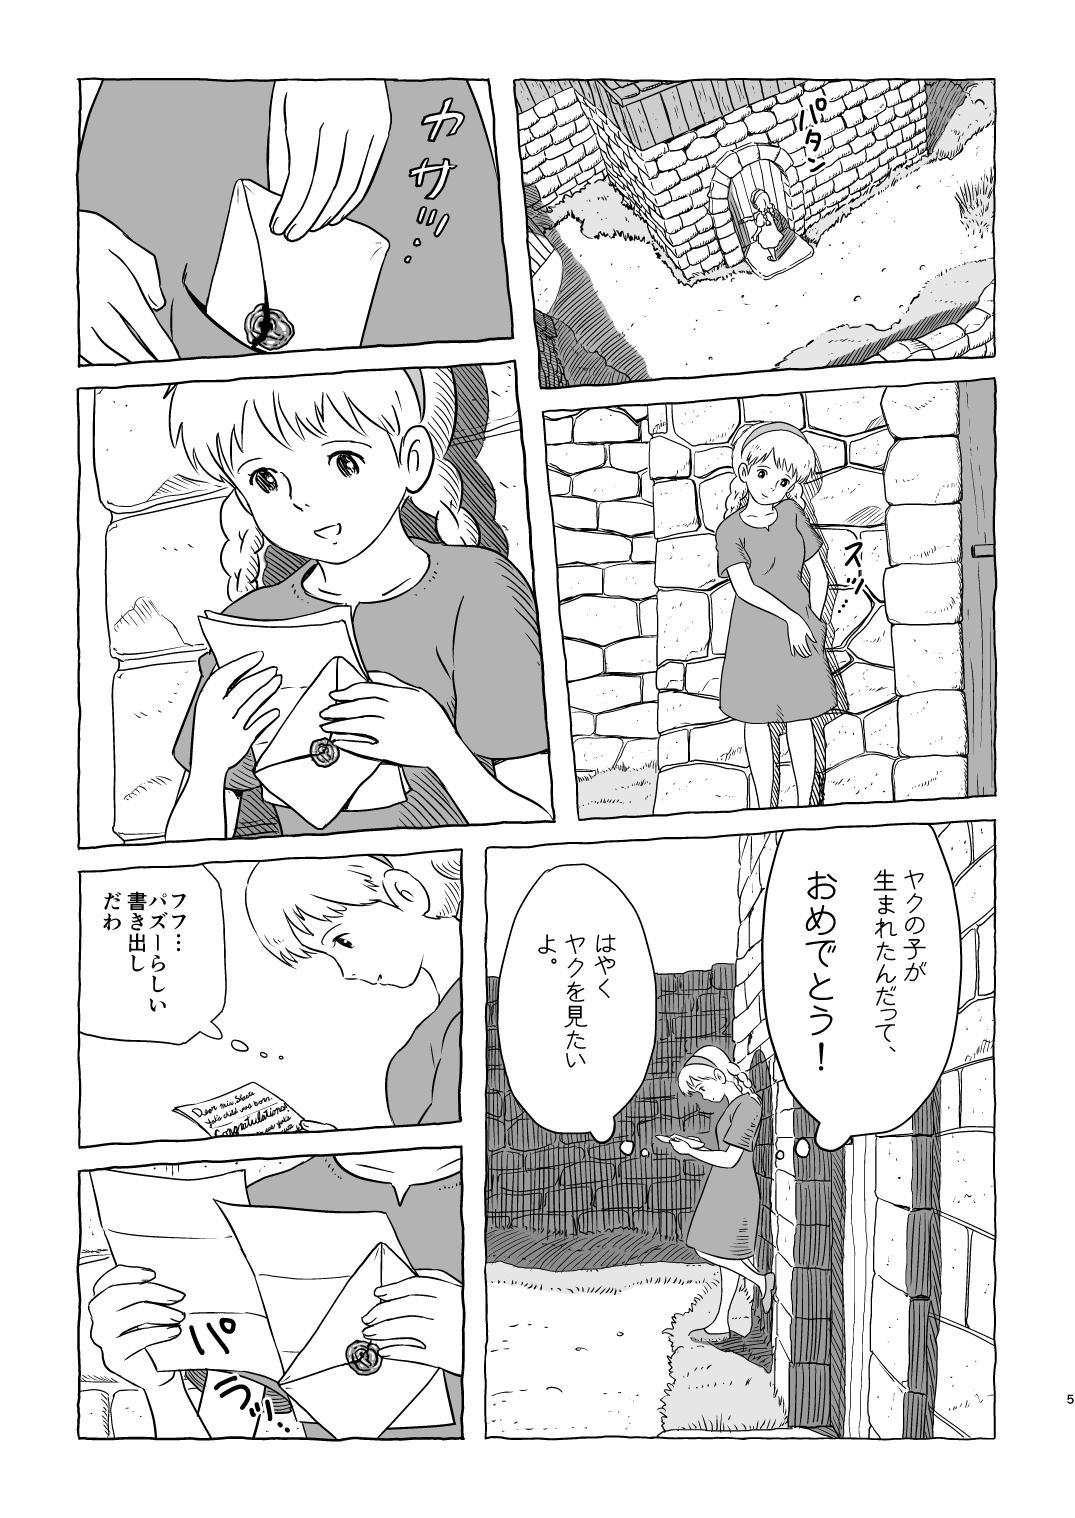 Wife ズブリ版幻のエンディング - Laputa castle in the sky Periscope - Page 5